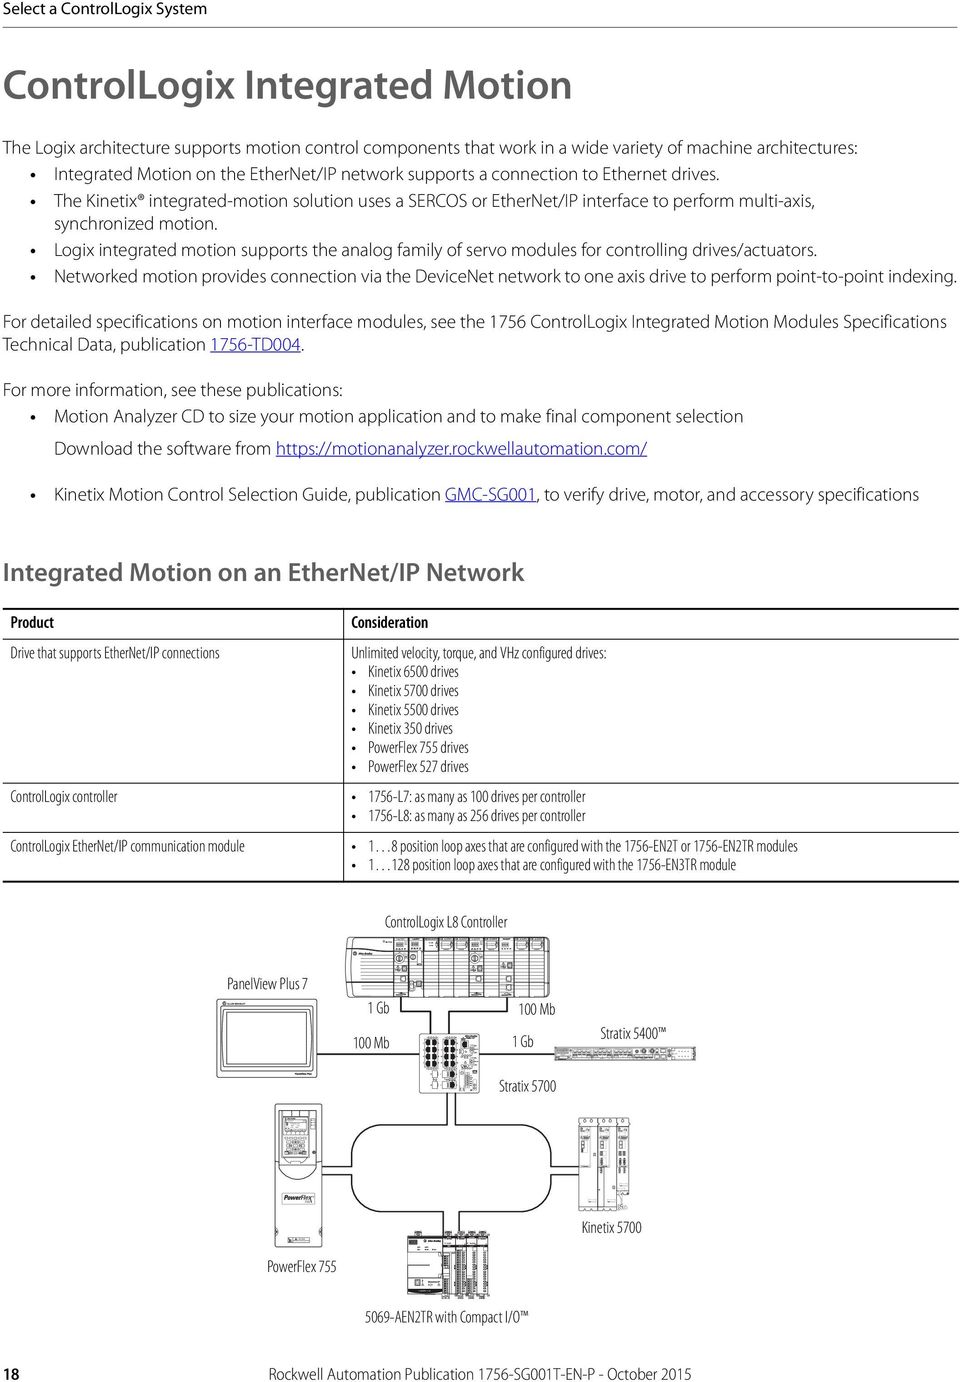 5069-oa16 wiring diagram